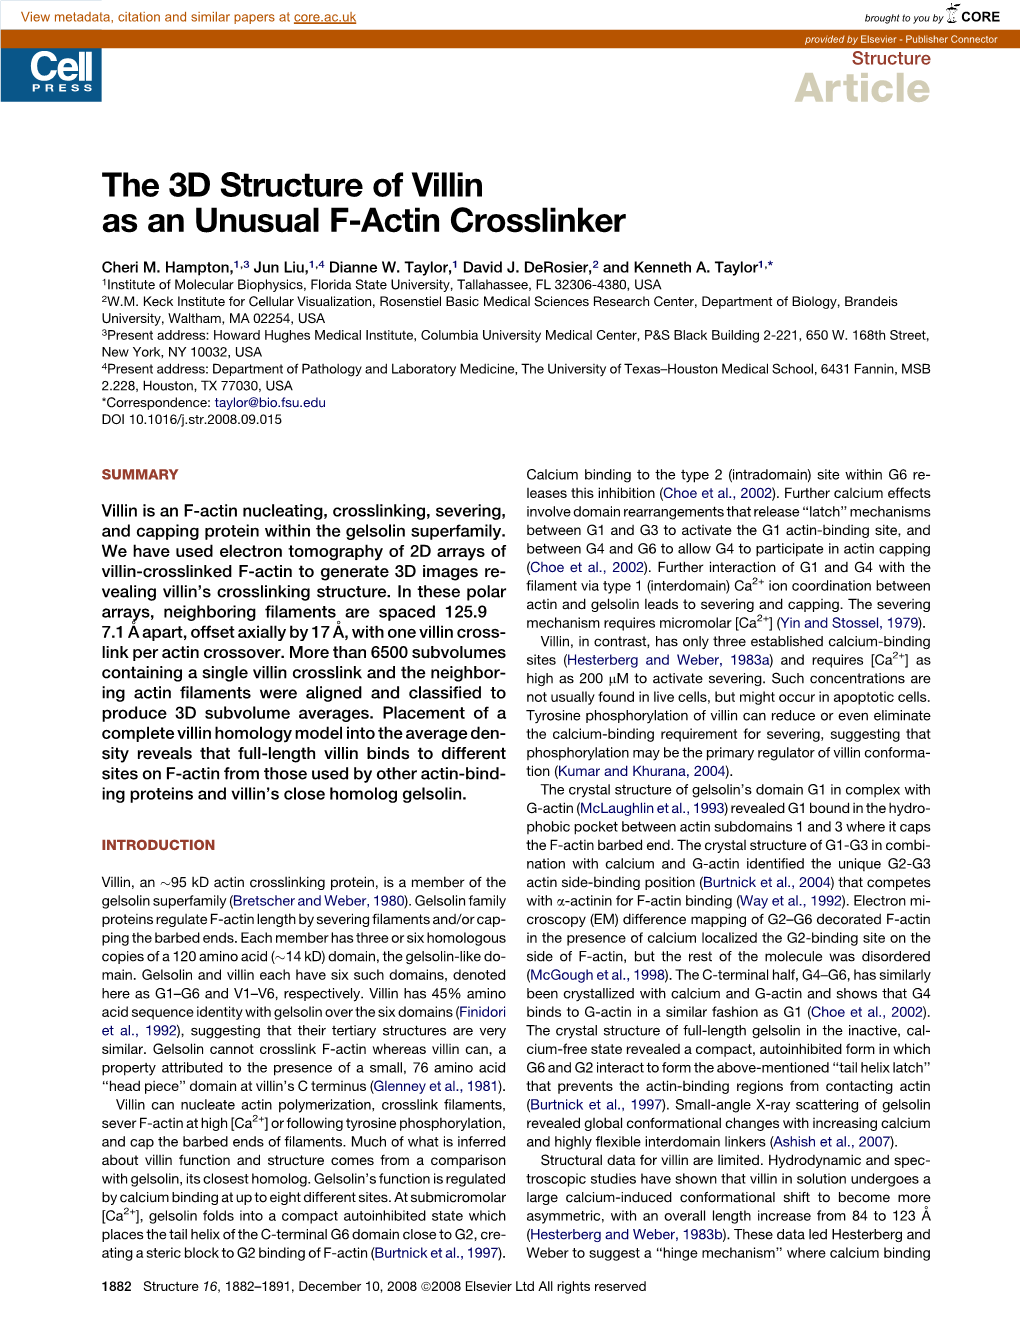 The 3D Structure of Villin As an Unusual F-Actin Crosslinker